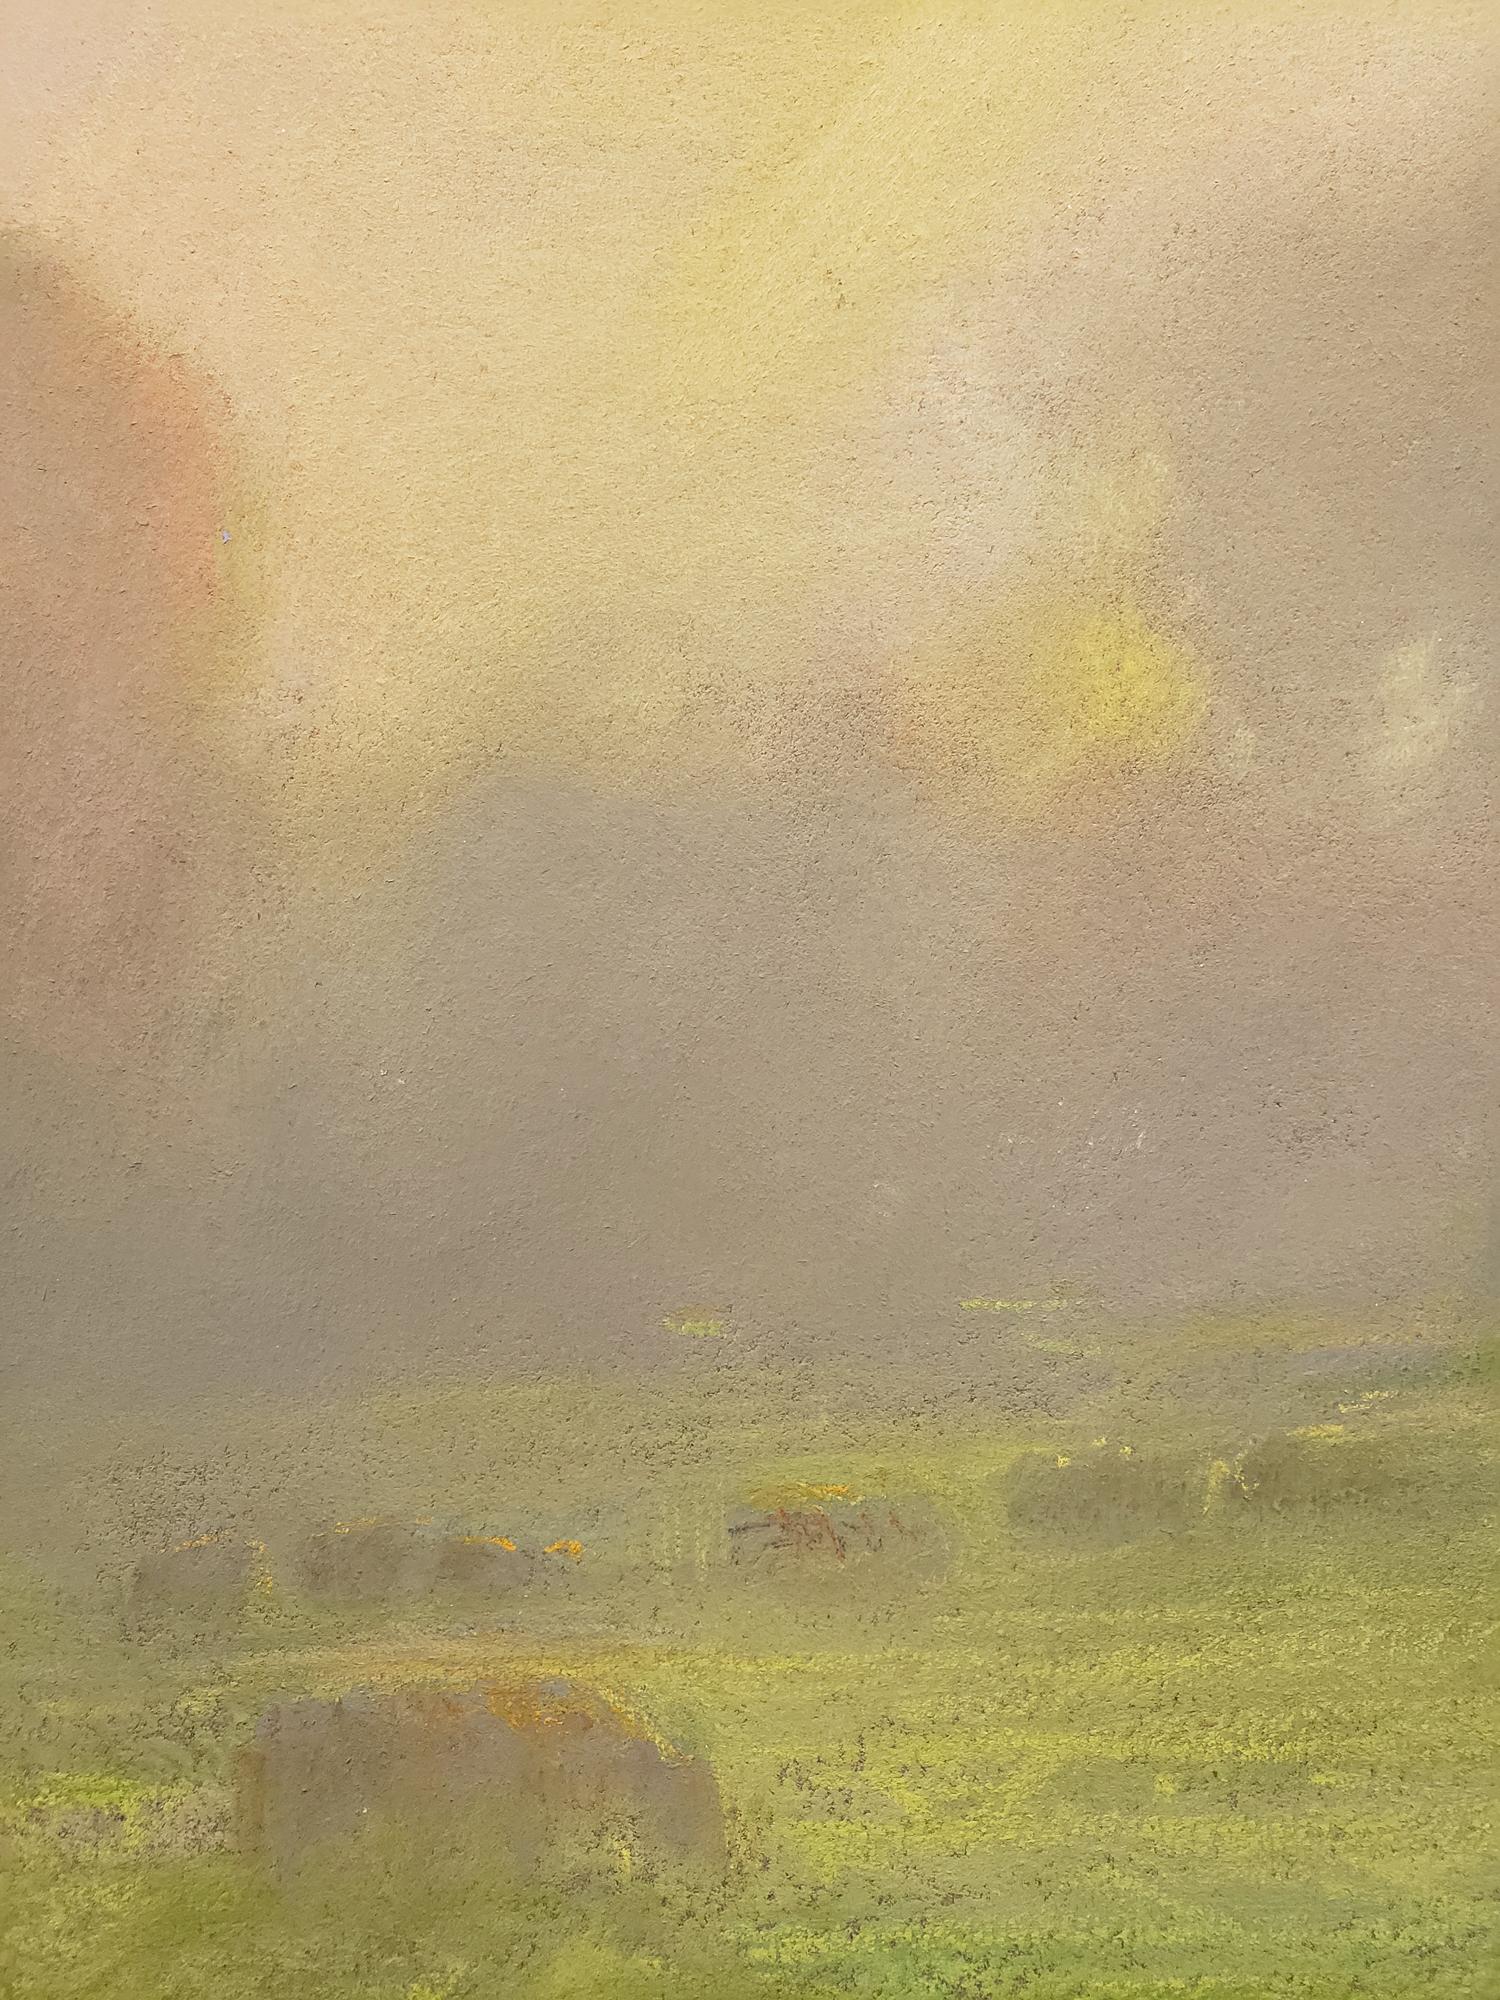 Pastoral Morning; Redding - Beige Landscape Painting by Peter Adams